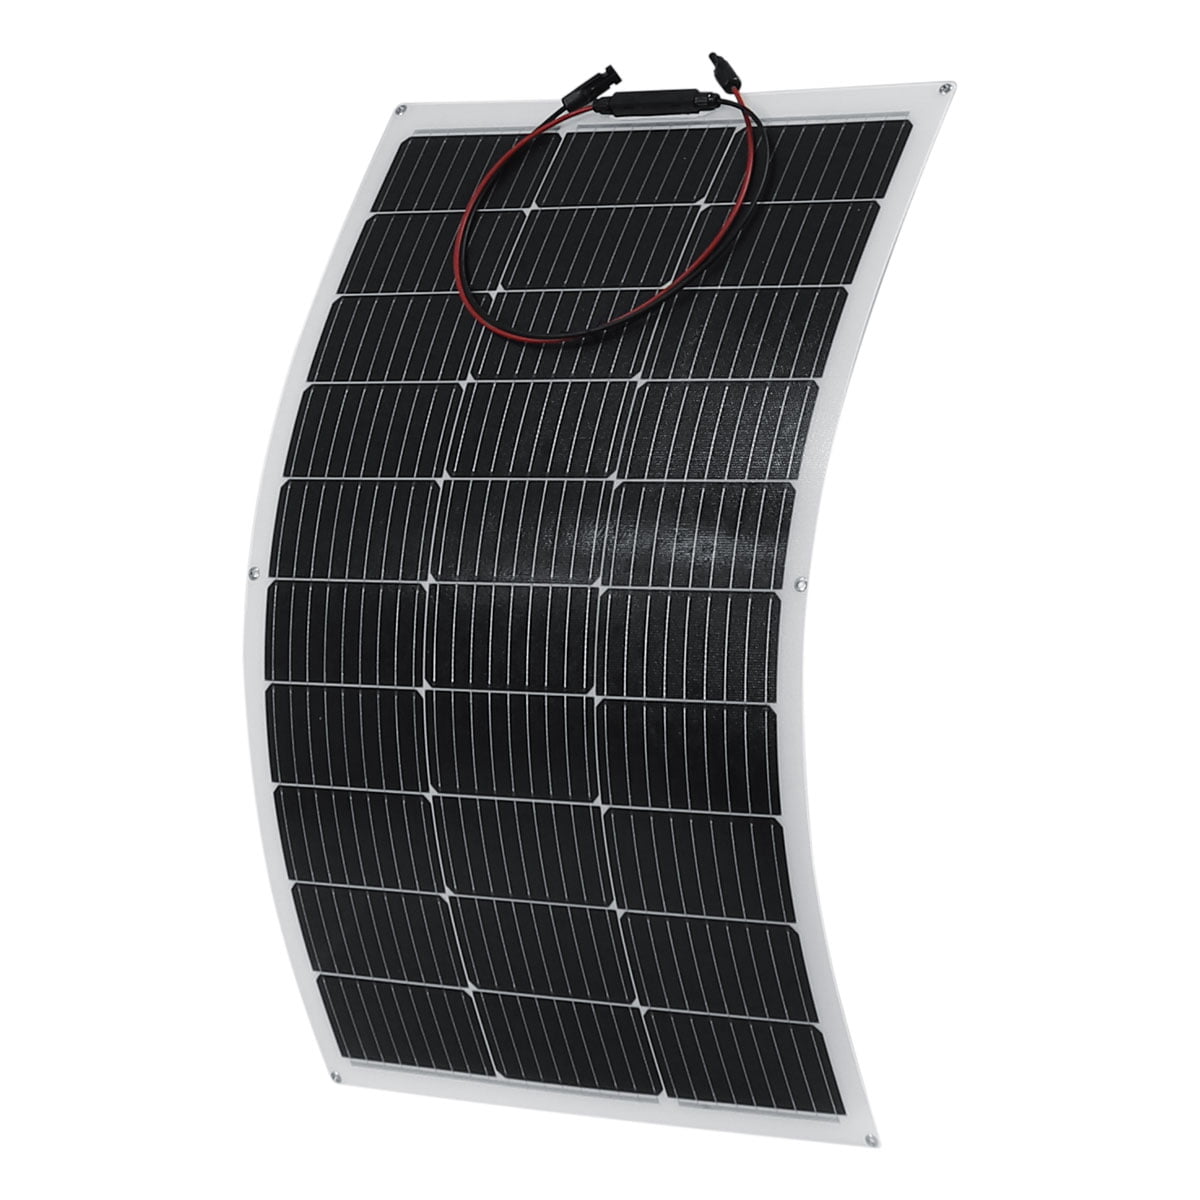 Painel Solar Fotovoltaico Flexível 100w